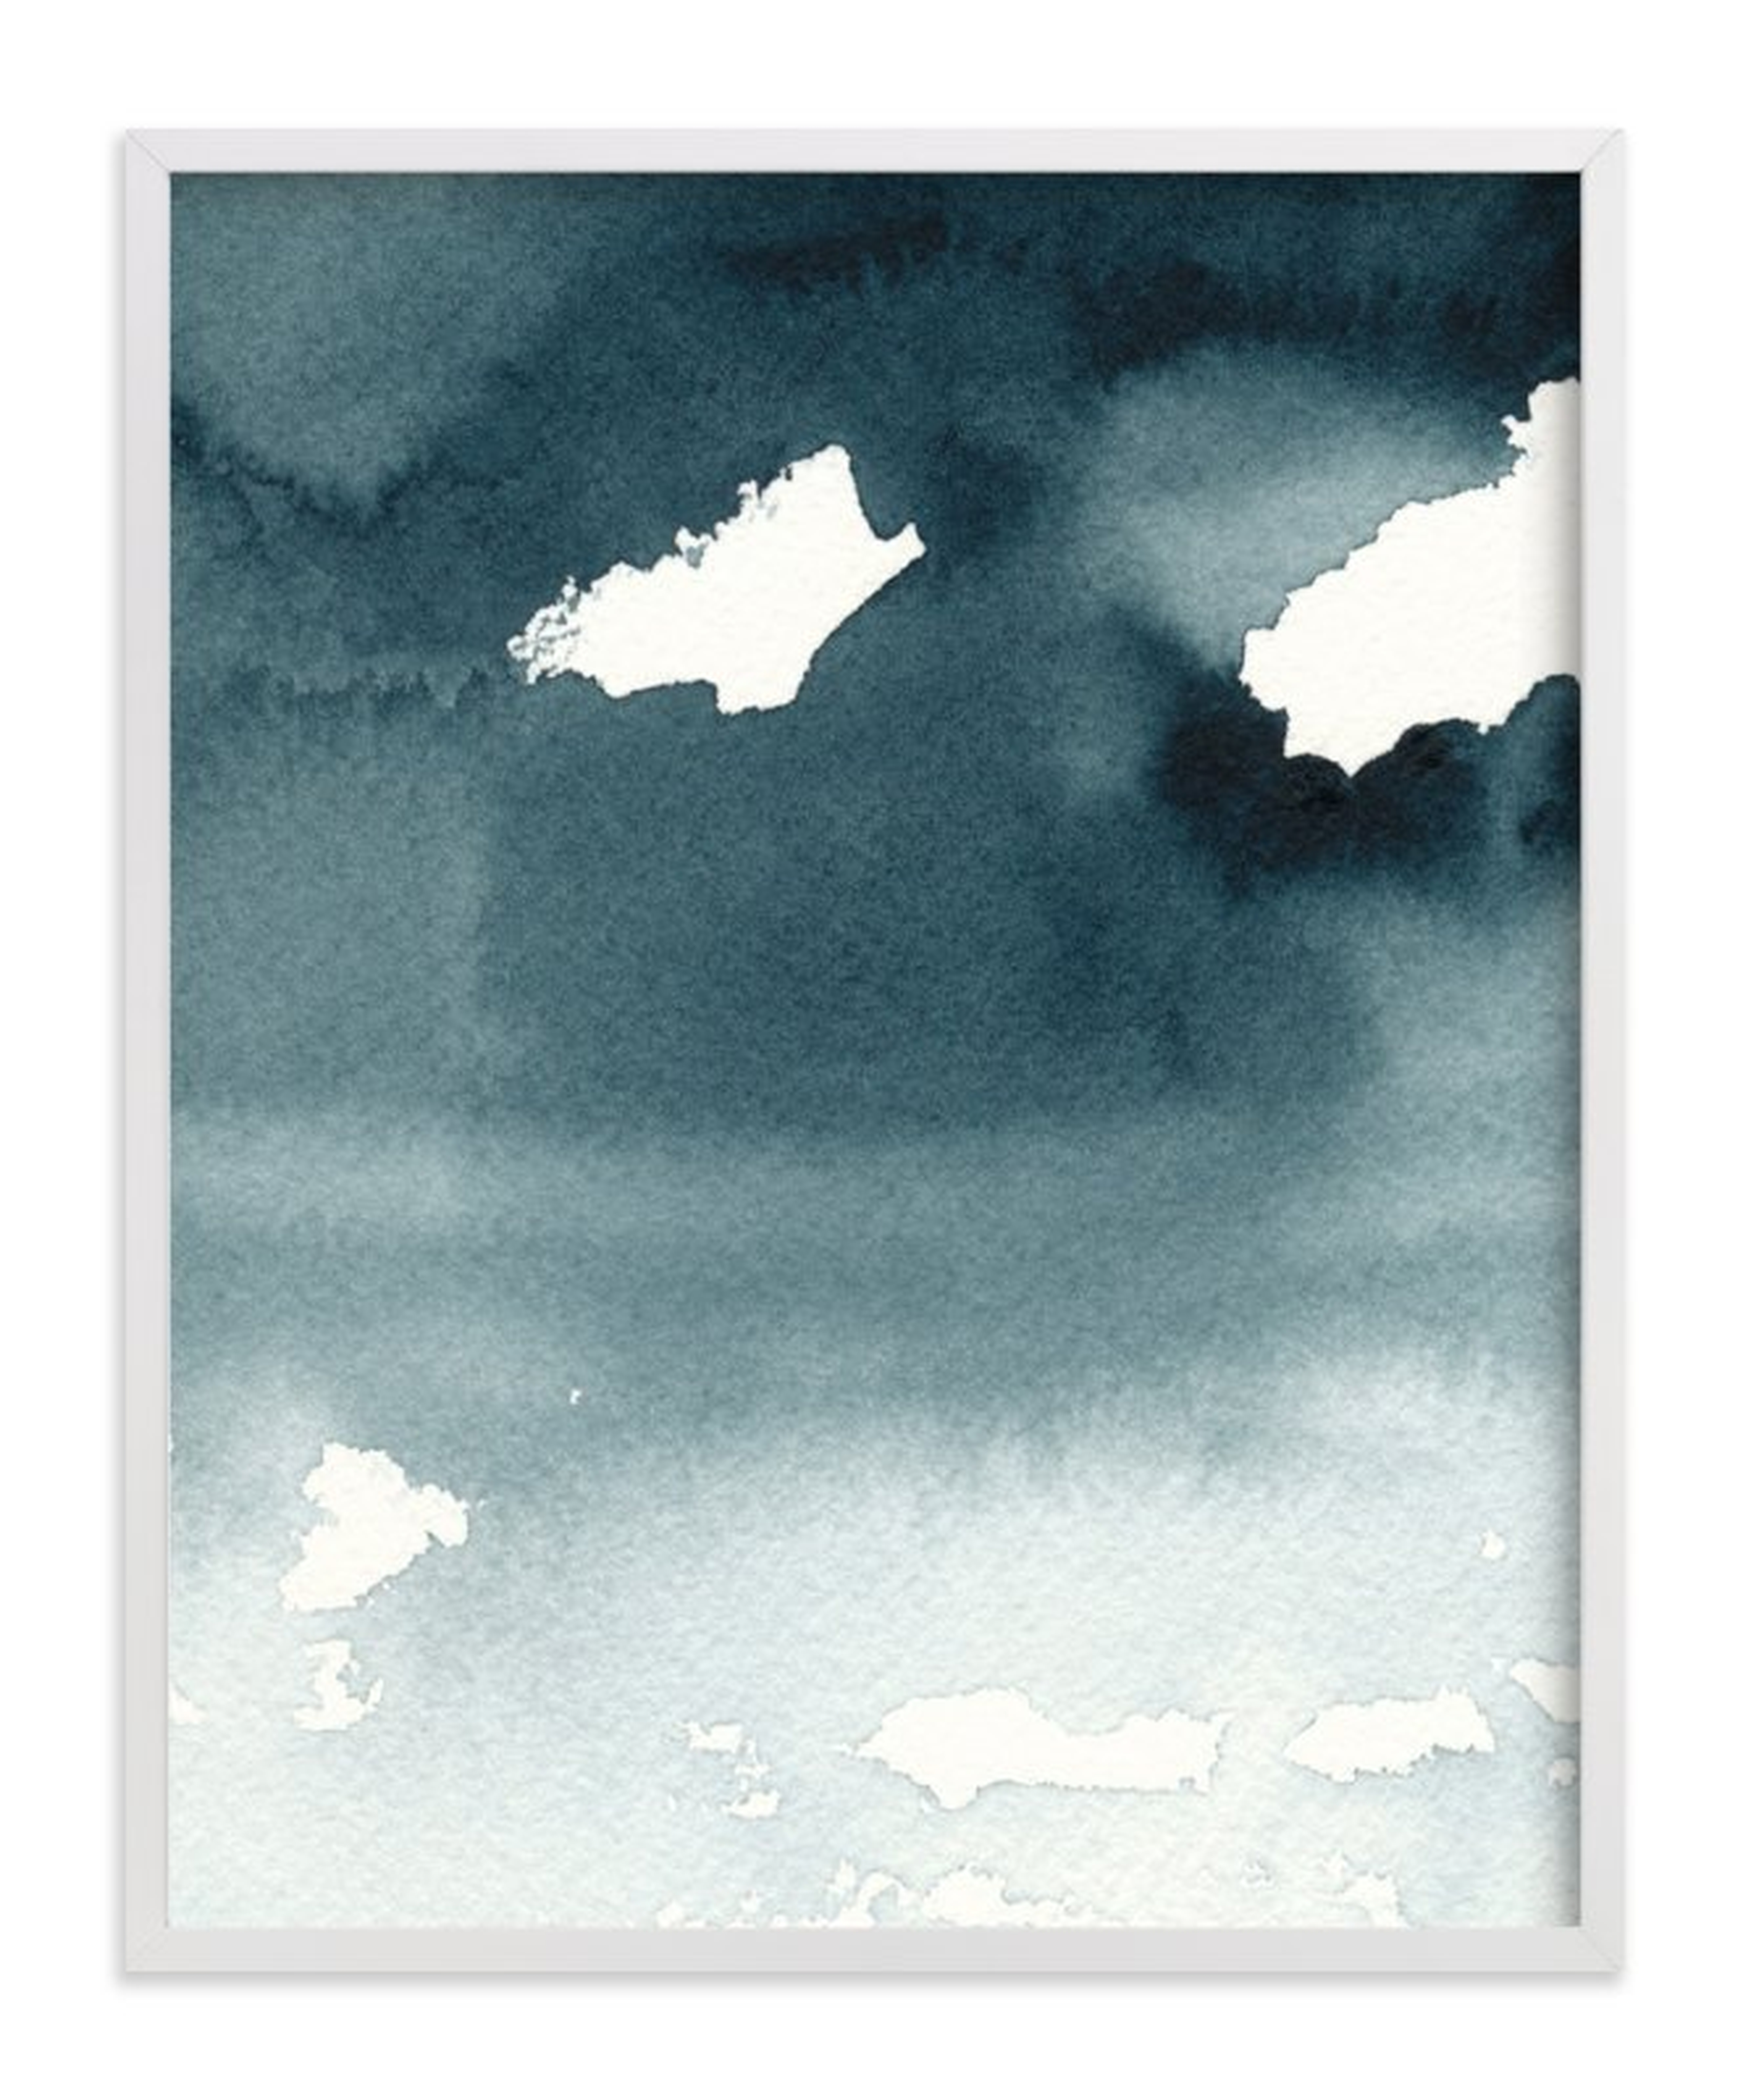 mist rises over the water framed art print - 16" x 20" - white wood frame - Minted